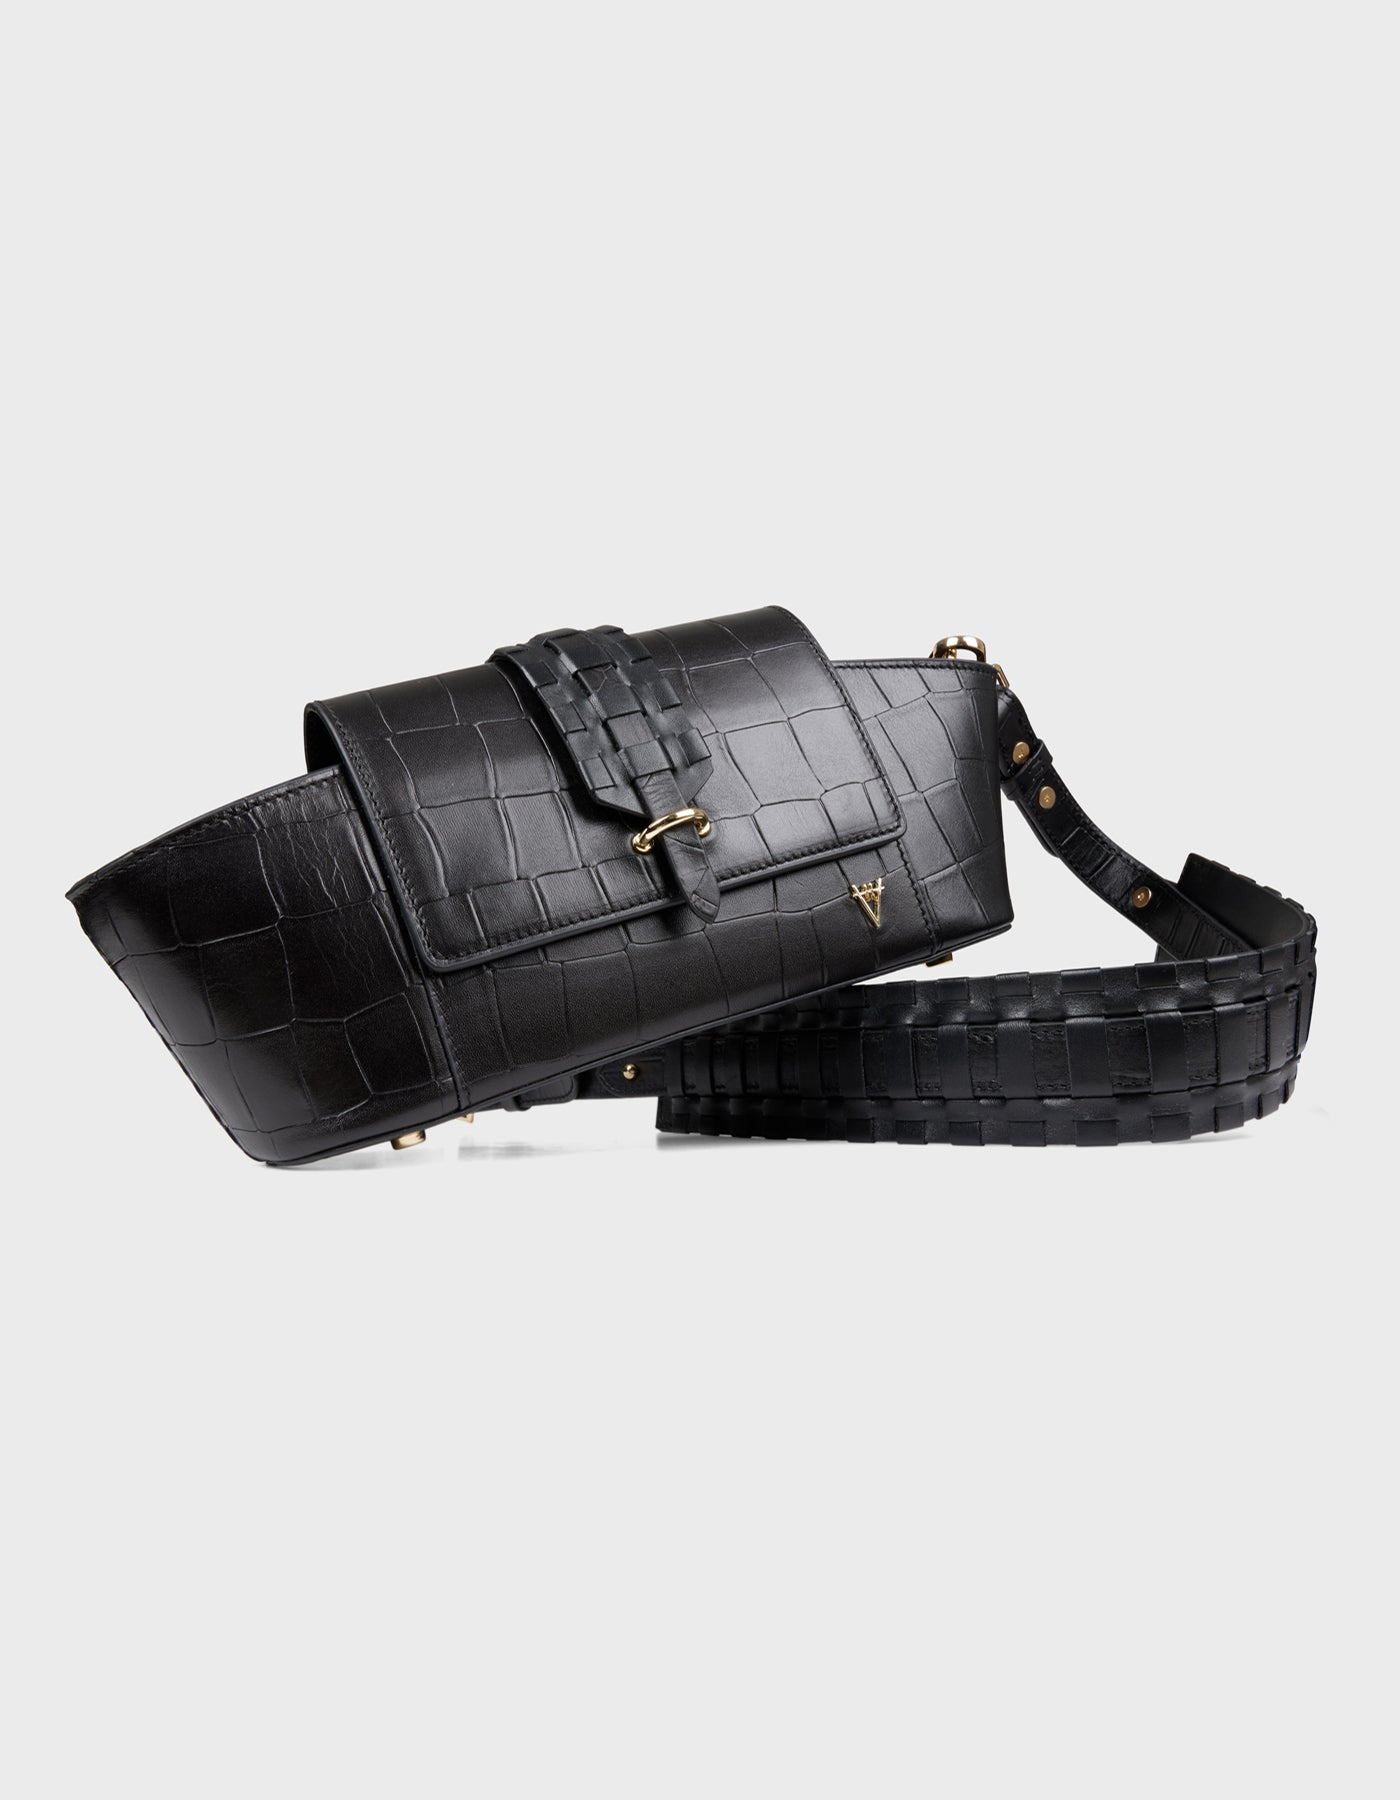 HiVa Atelier | Navis Shoulder Bag Croco Effect Black | Beautiful and Versatile